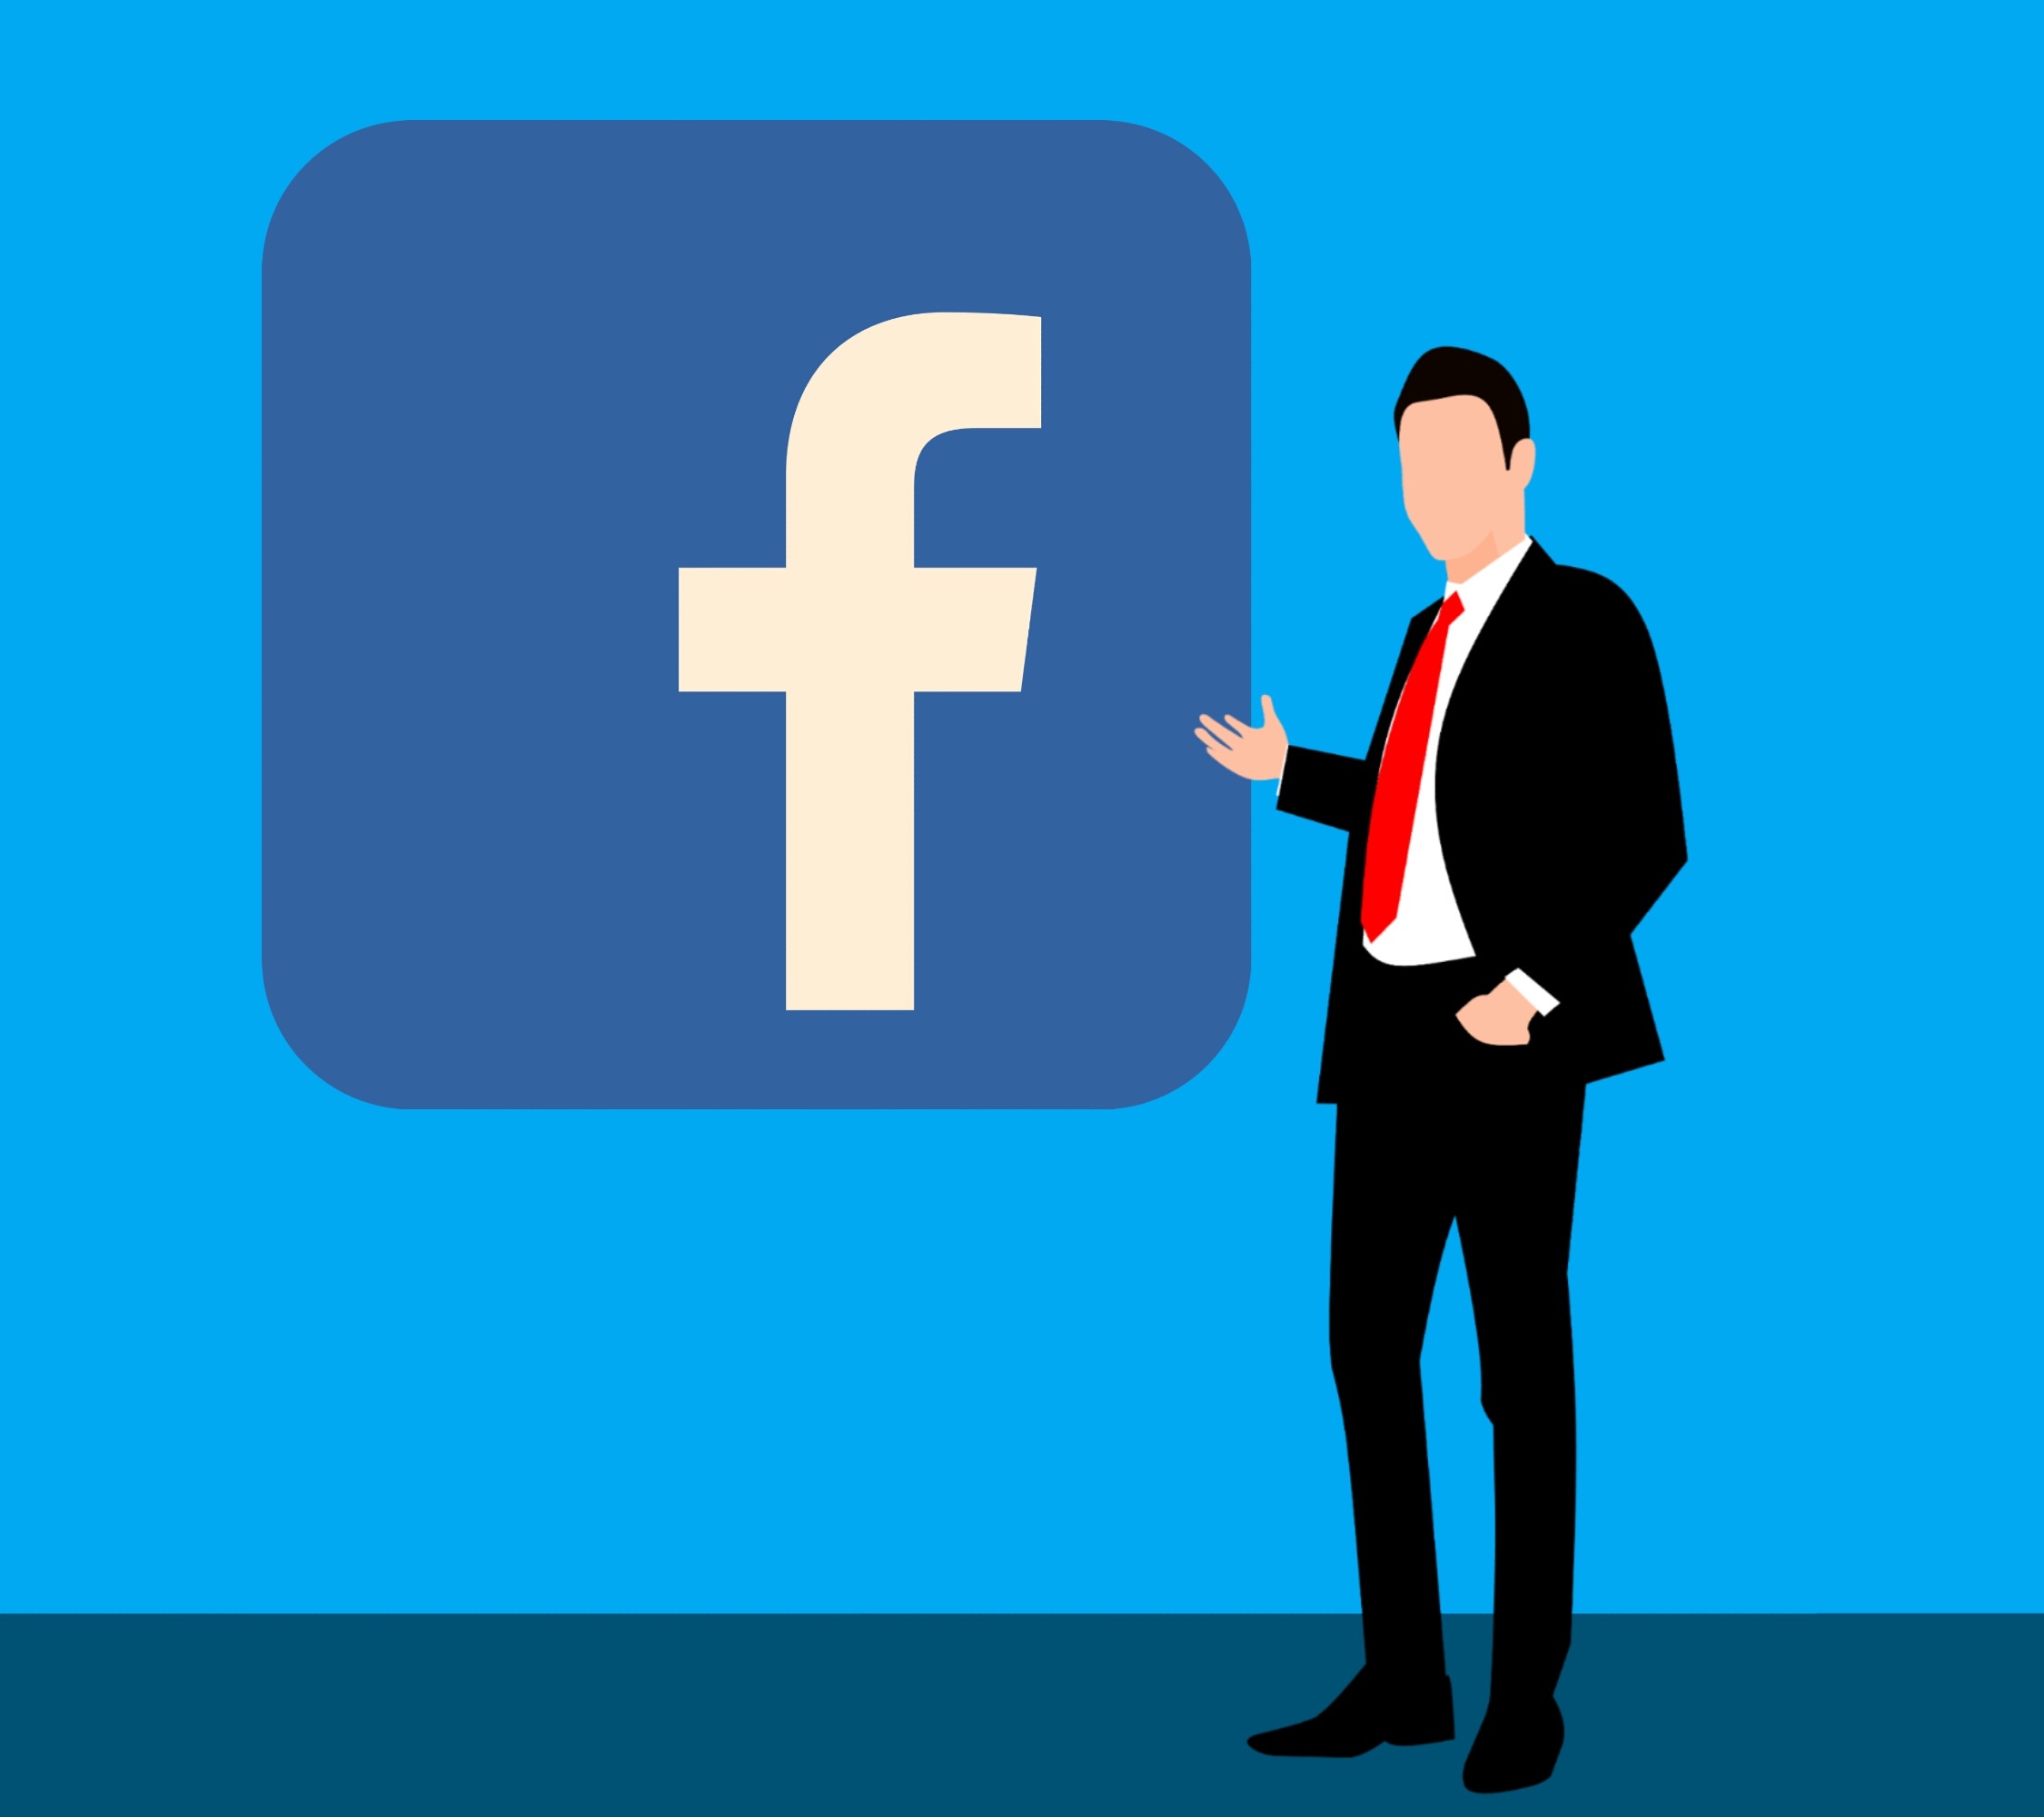 Facebookbm购买 | 专利创新助力中性社交新体验